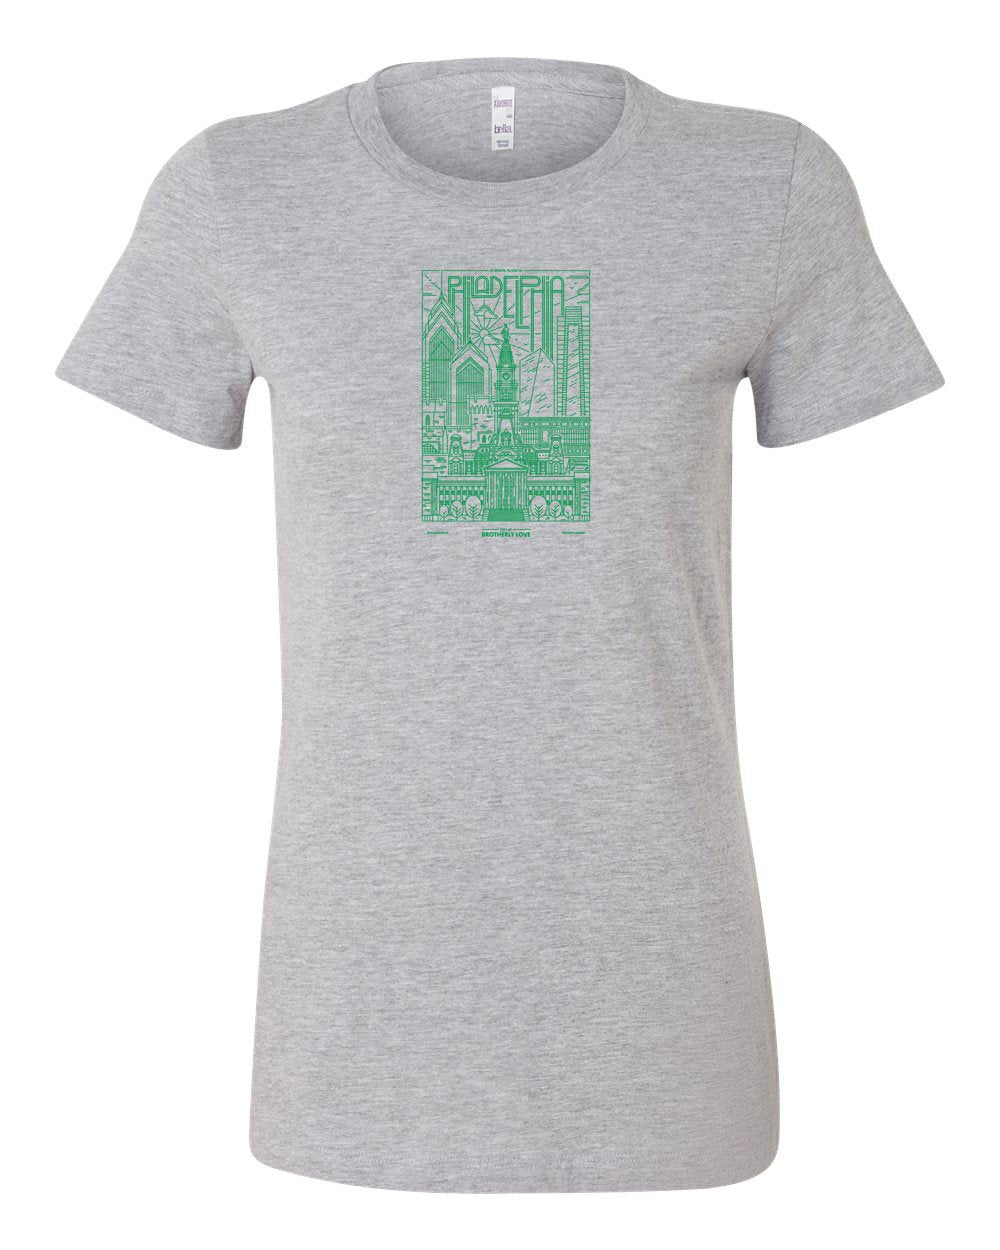 Philadelphia Skyline V2 (Green Ink) LADIES Junior-Fit T-Shirt